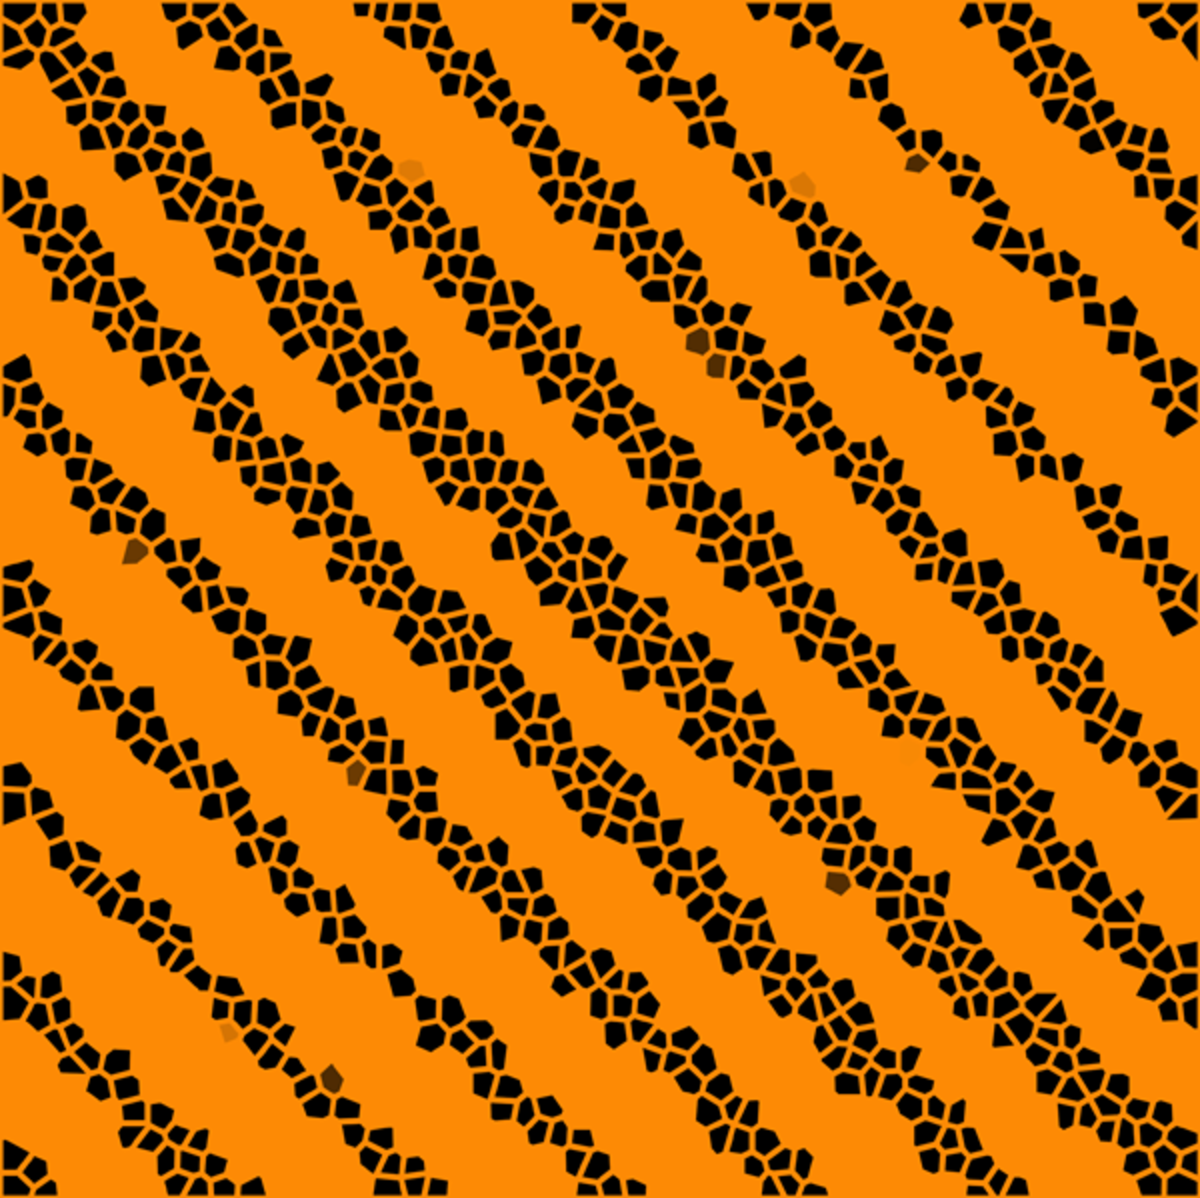  Orange and black Halloween pattern.